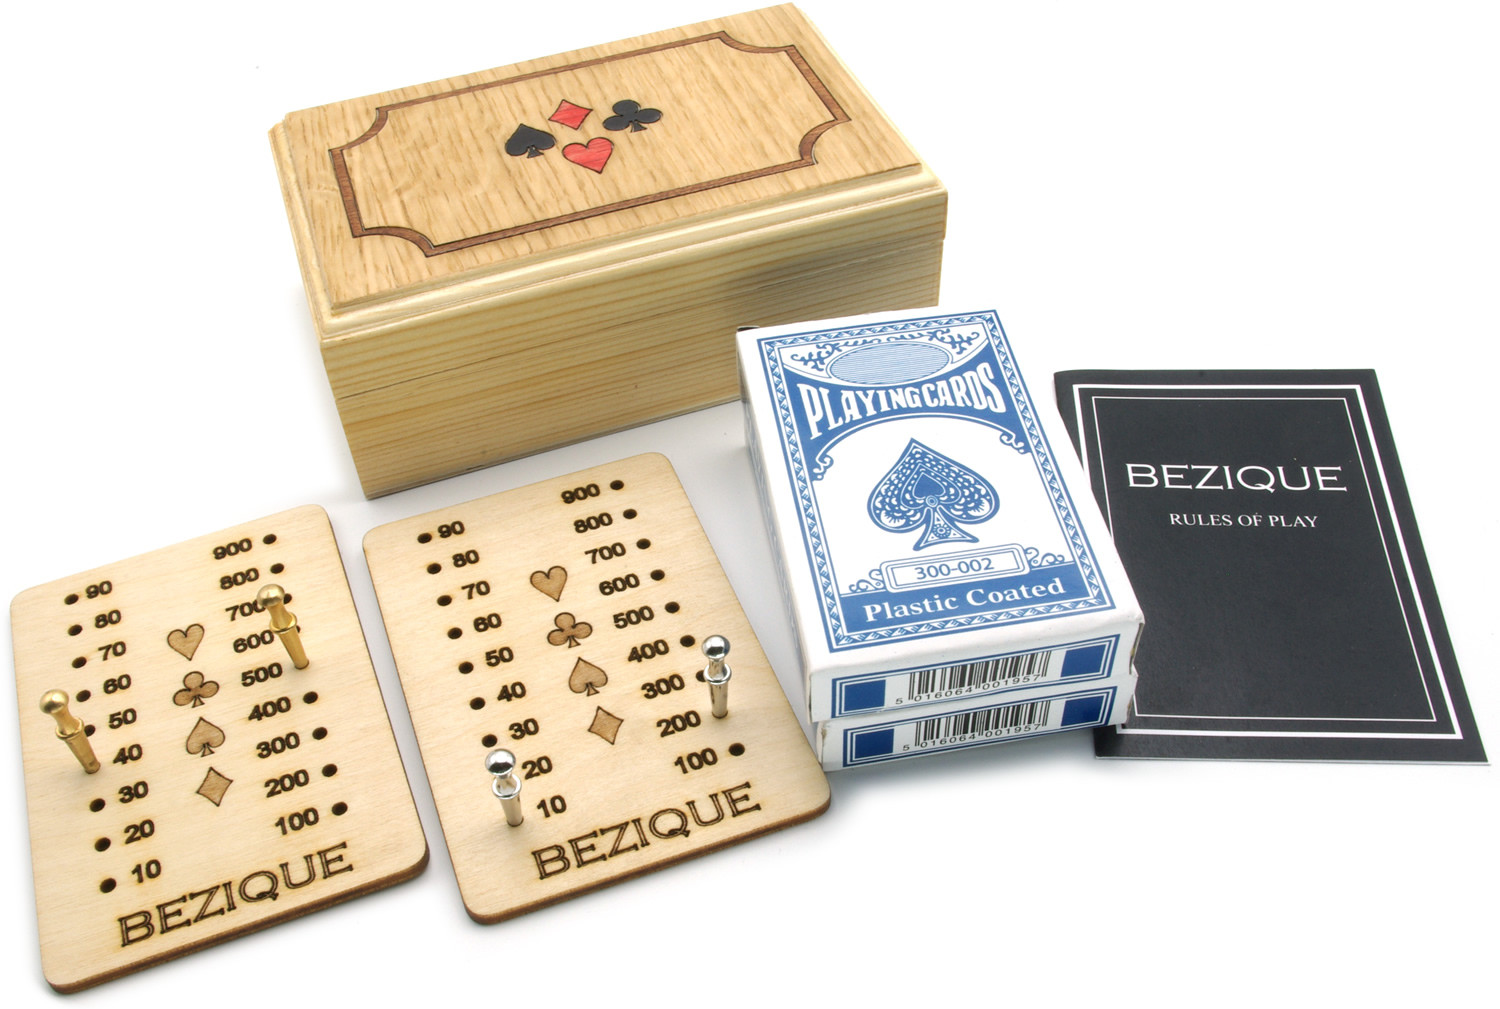 Bezique set in inlaid wooden box